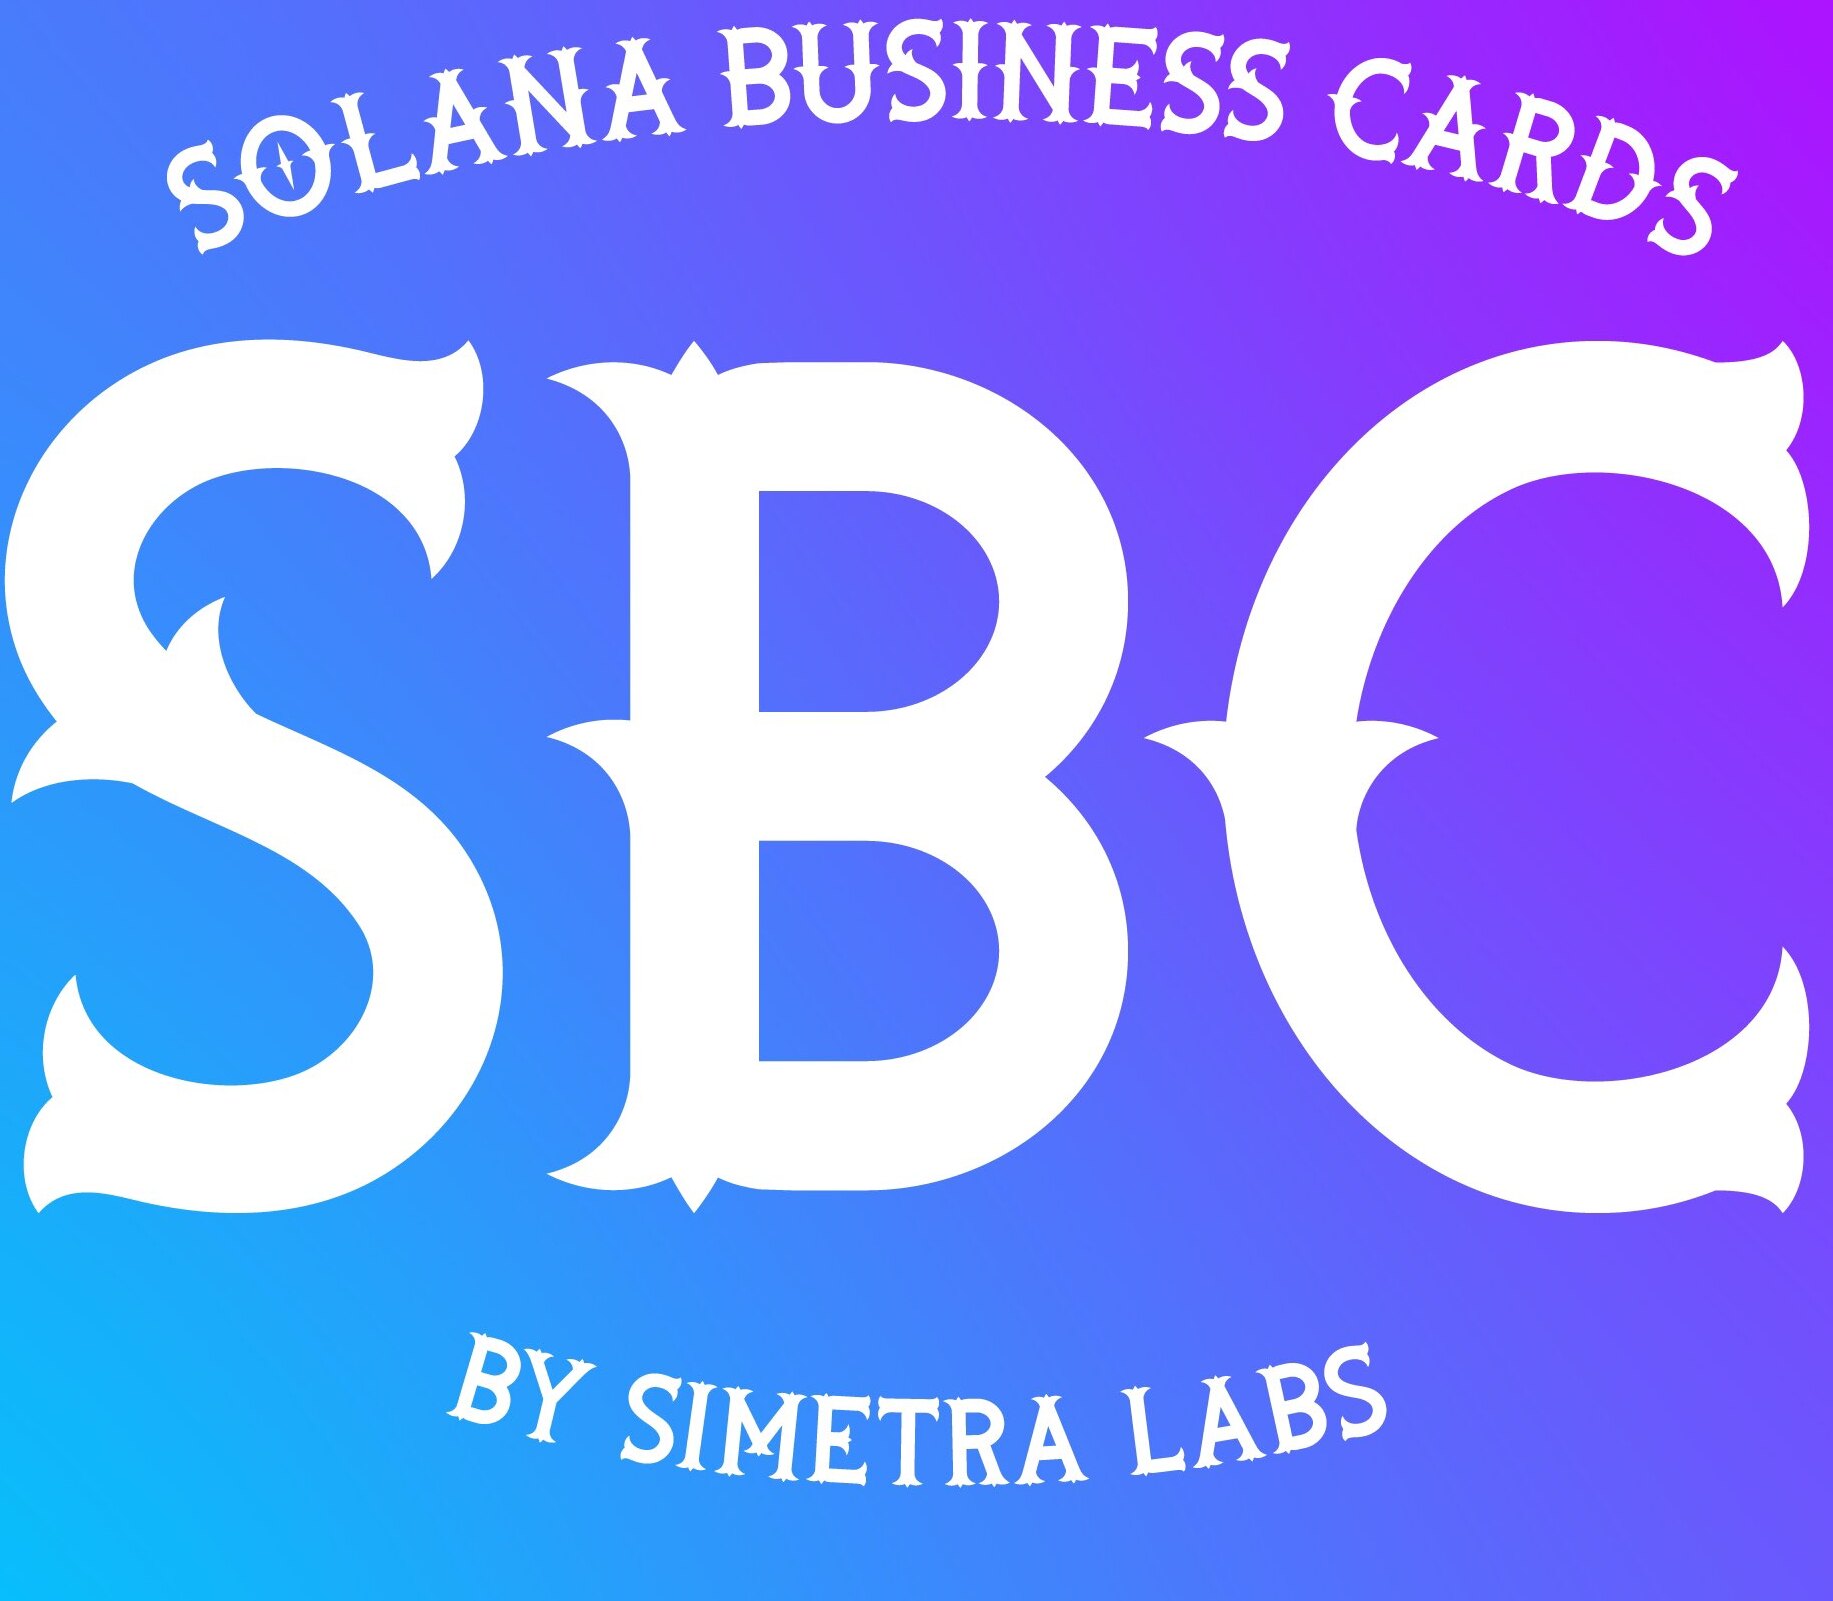 Solana Business Cards